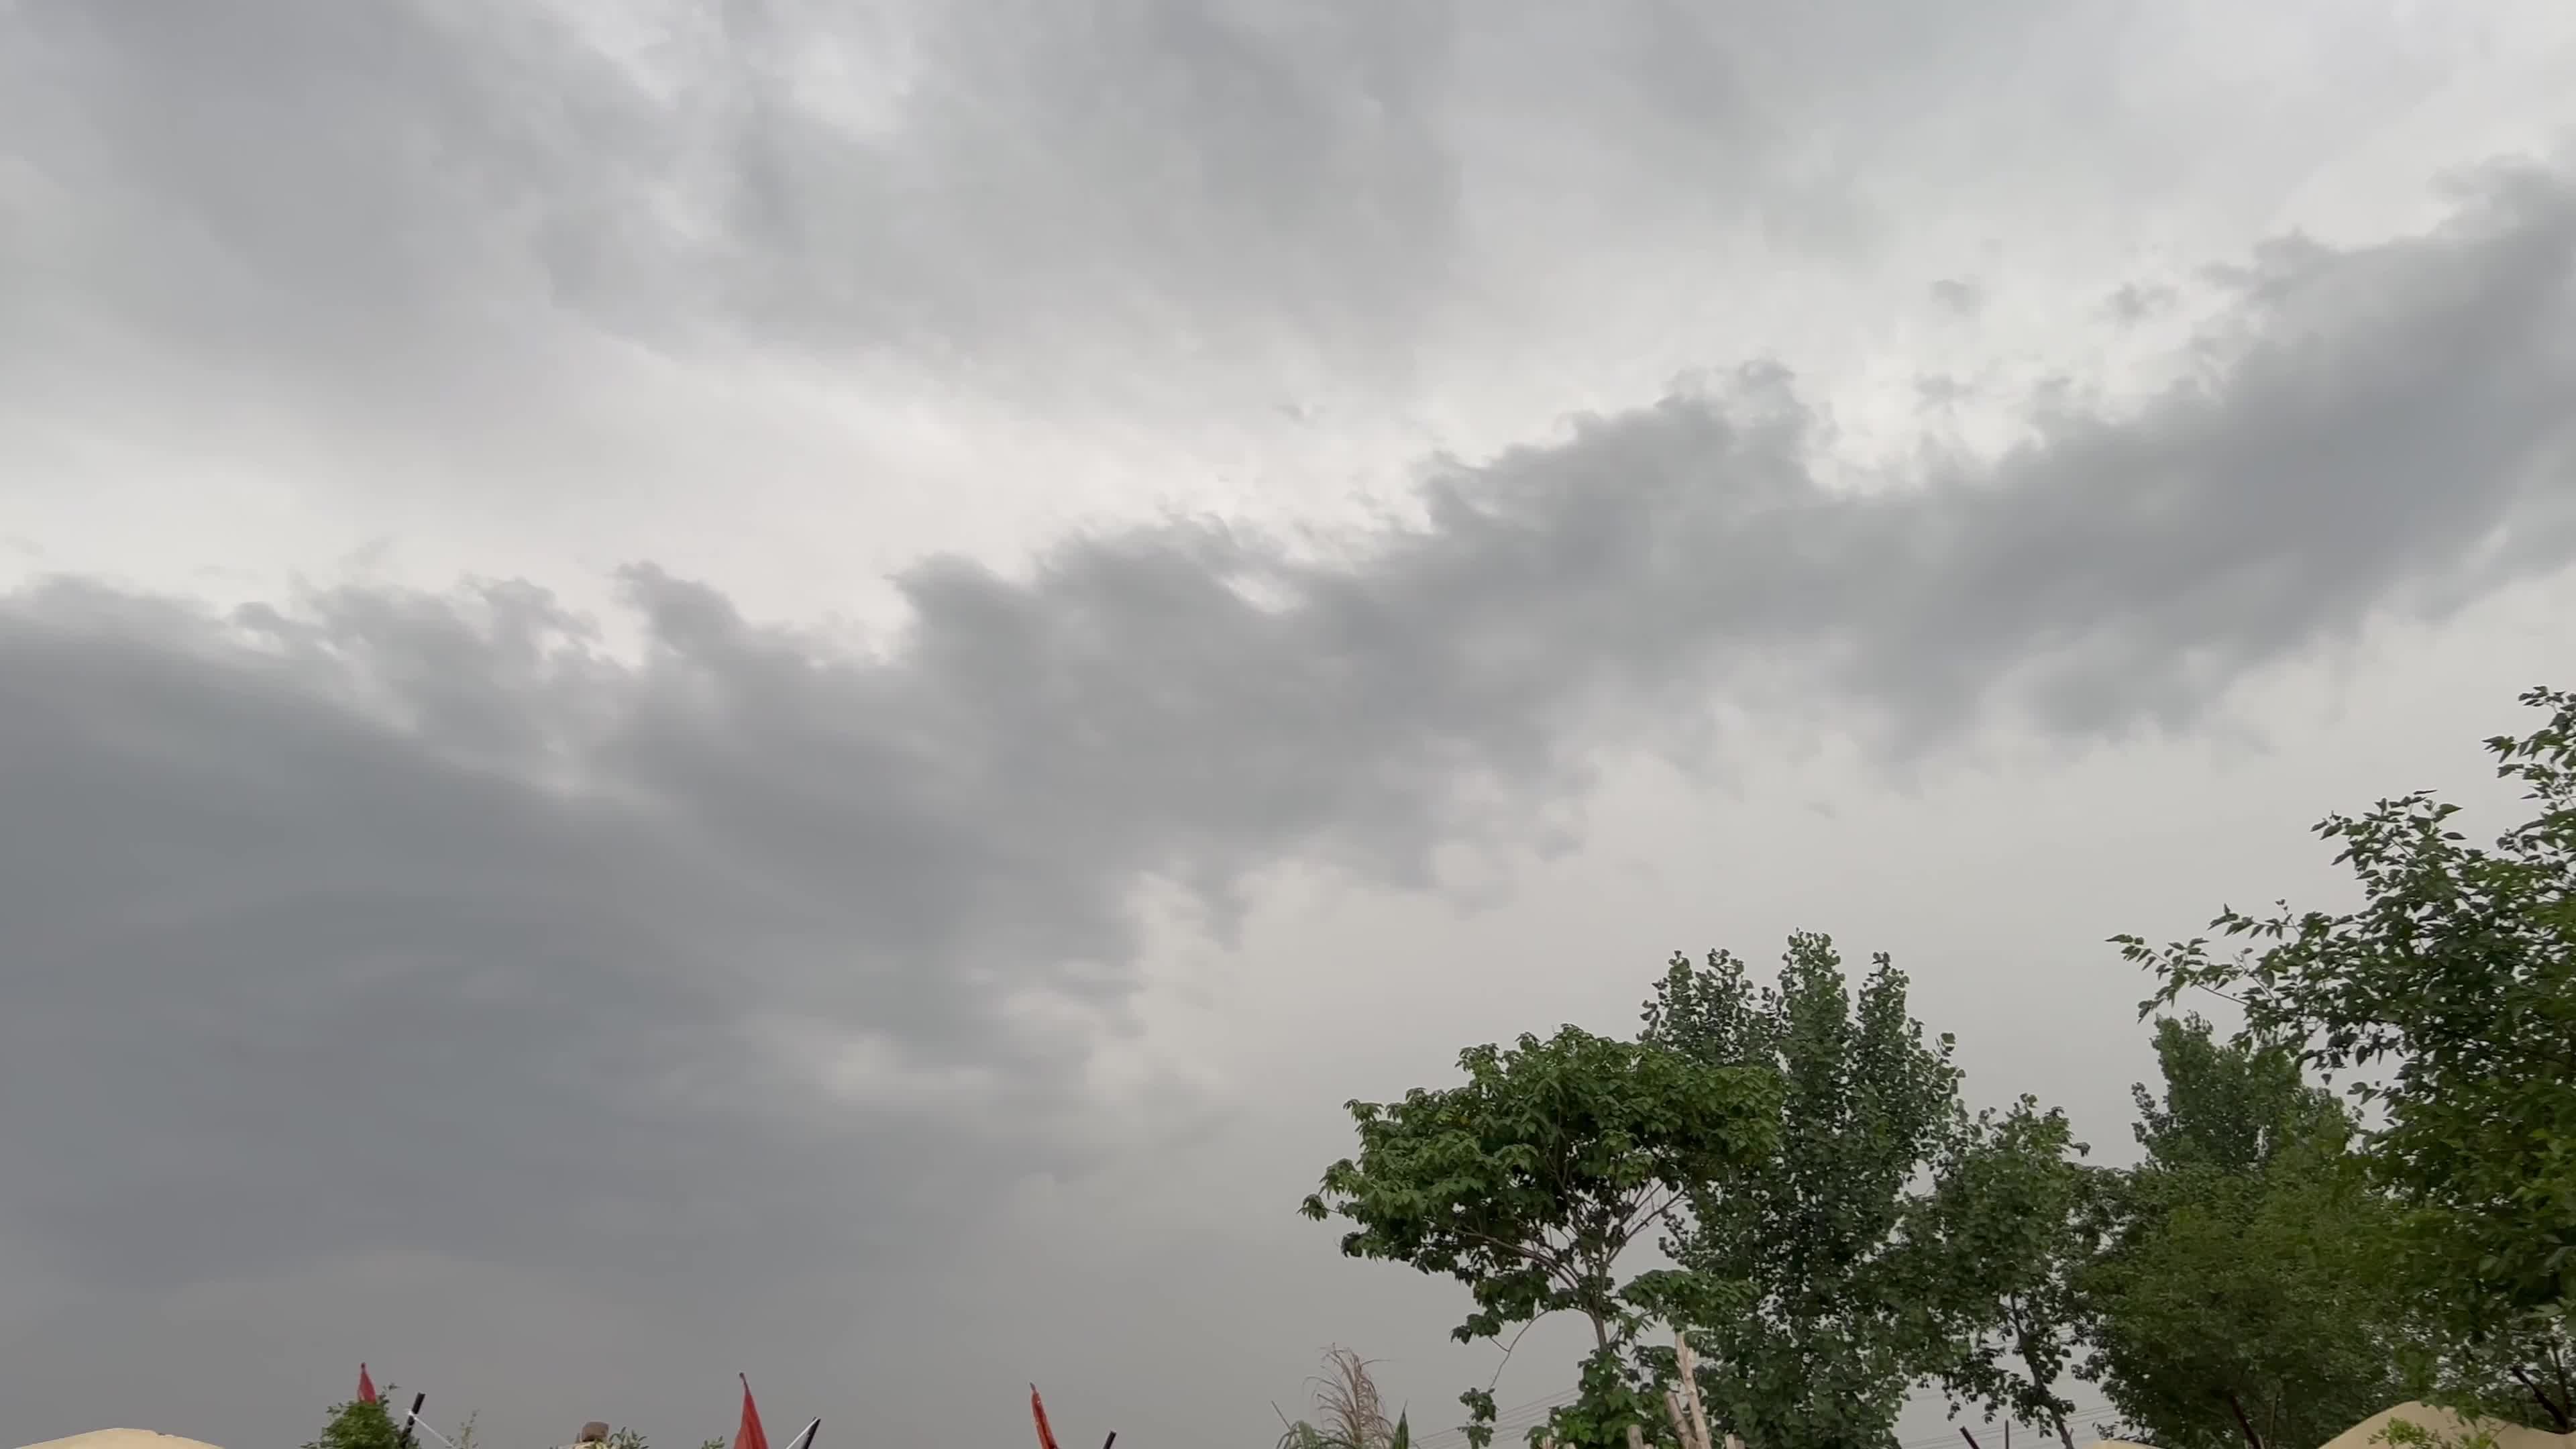 Rain Clouds Form at Dusk in Peshawar